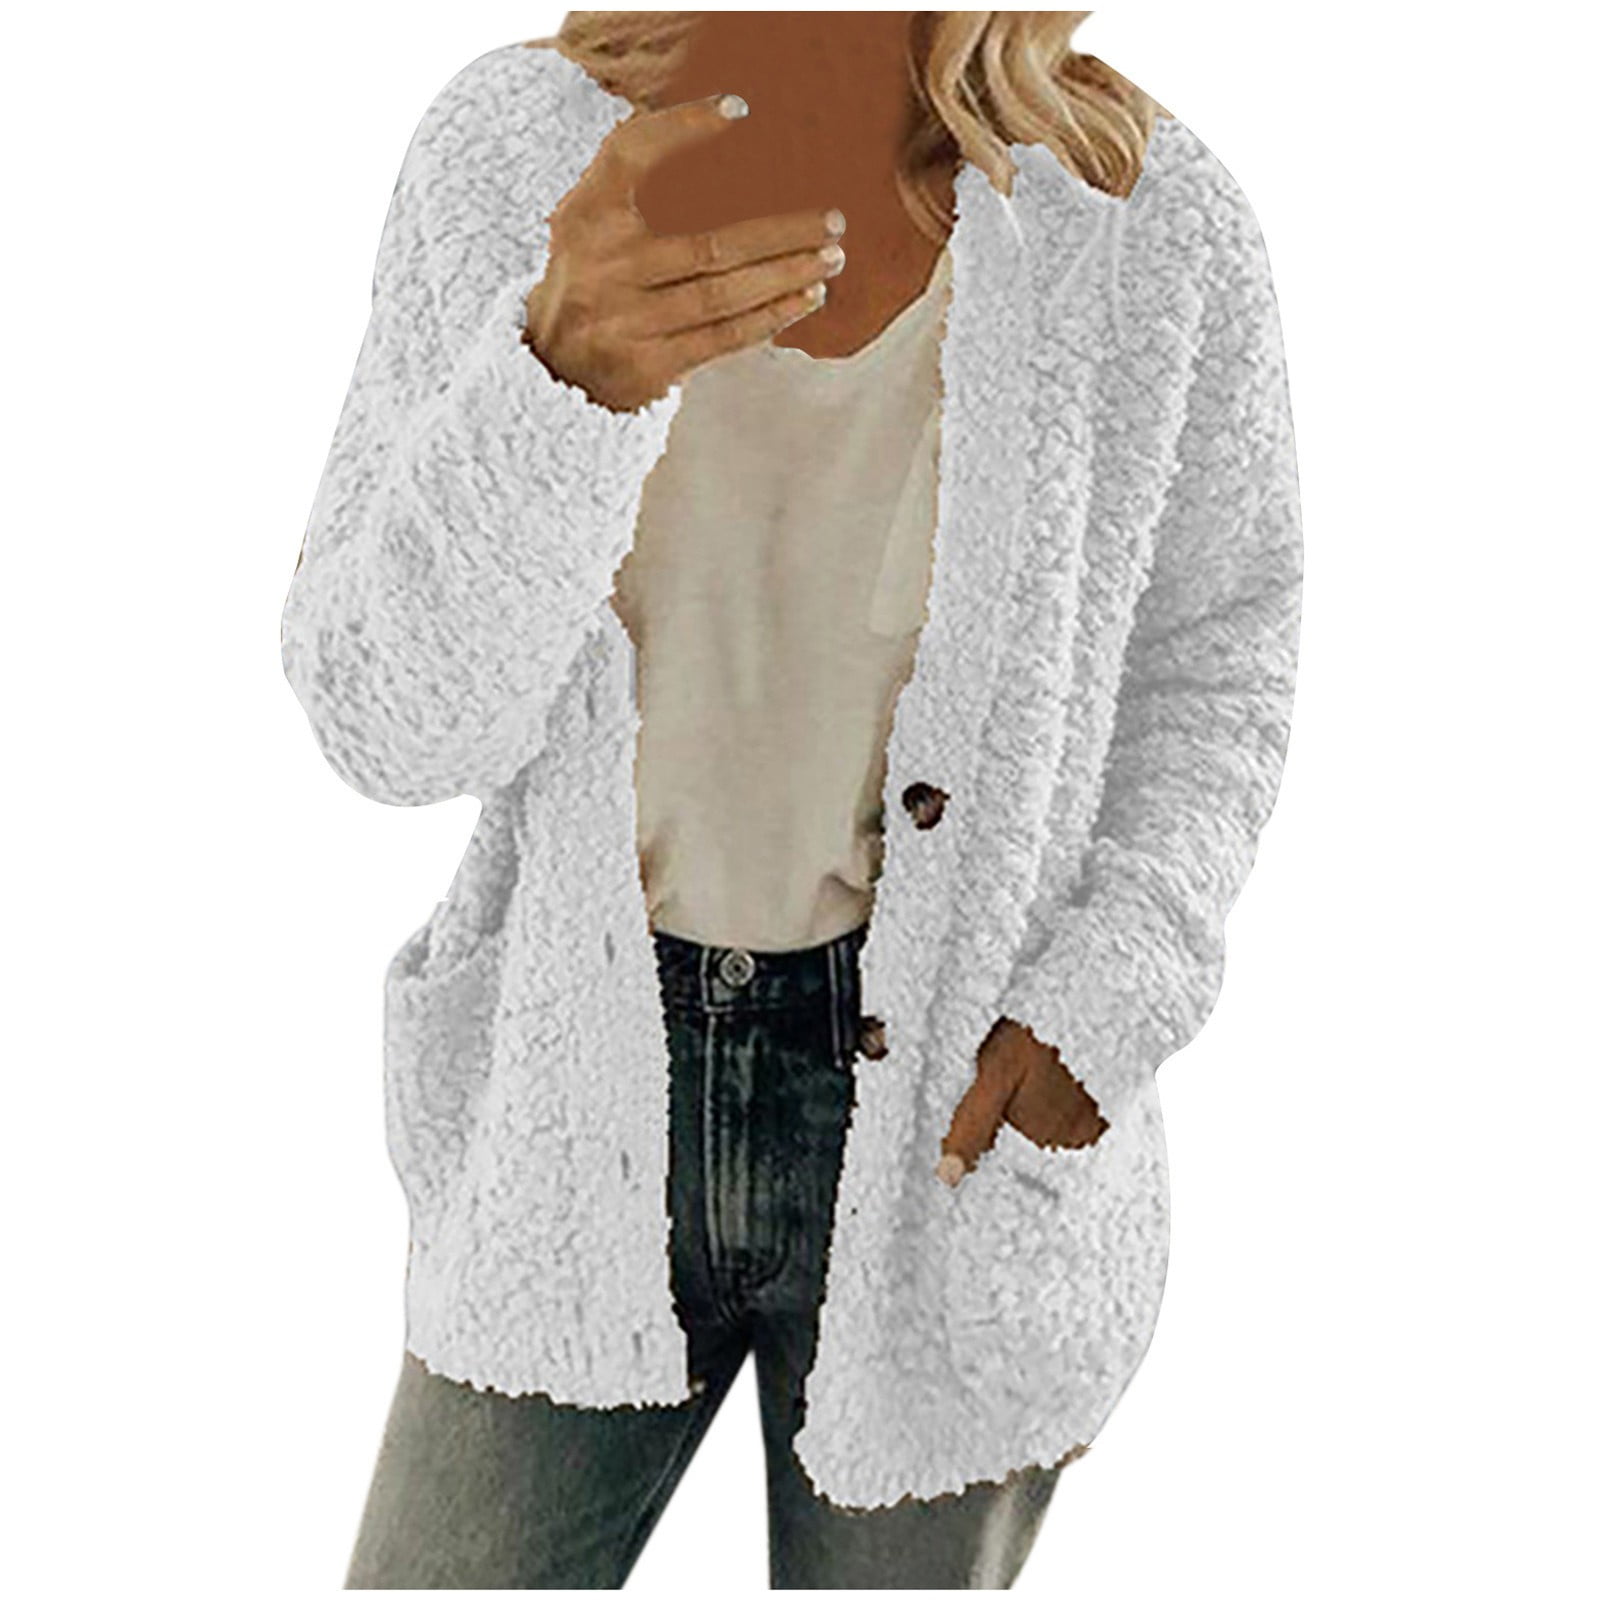 Fluffy Jacket Palin Button Down Clothes Oversized Cardigan Plus Size Jacket Fuzzy Cardigans Spring for Women UK Fleece Sweater Fuzzy Jacket - Walmart.com